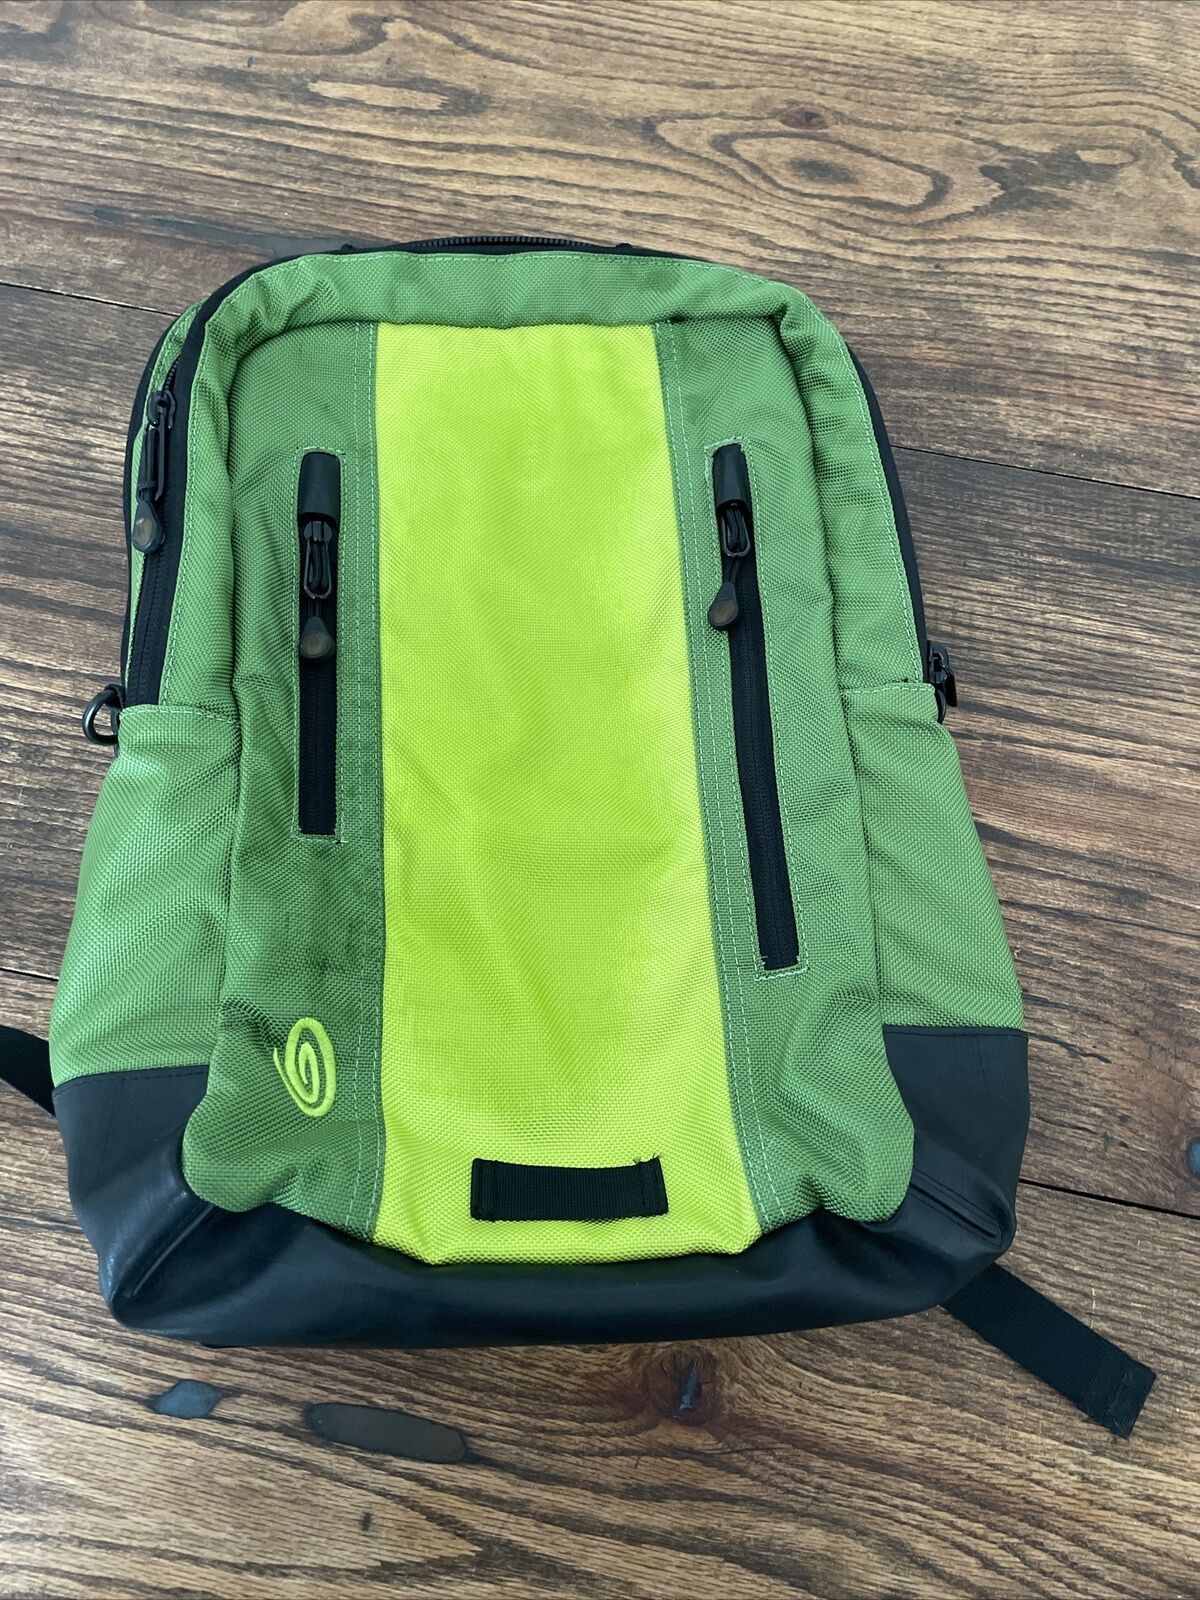 Timbuk2 Rumor  Backpack Daypack Bag Padded Laptop Compartment Green Yellow